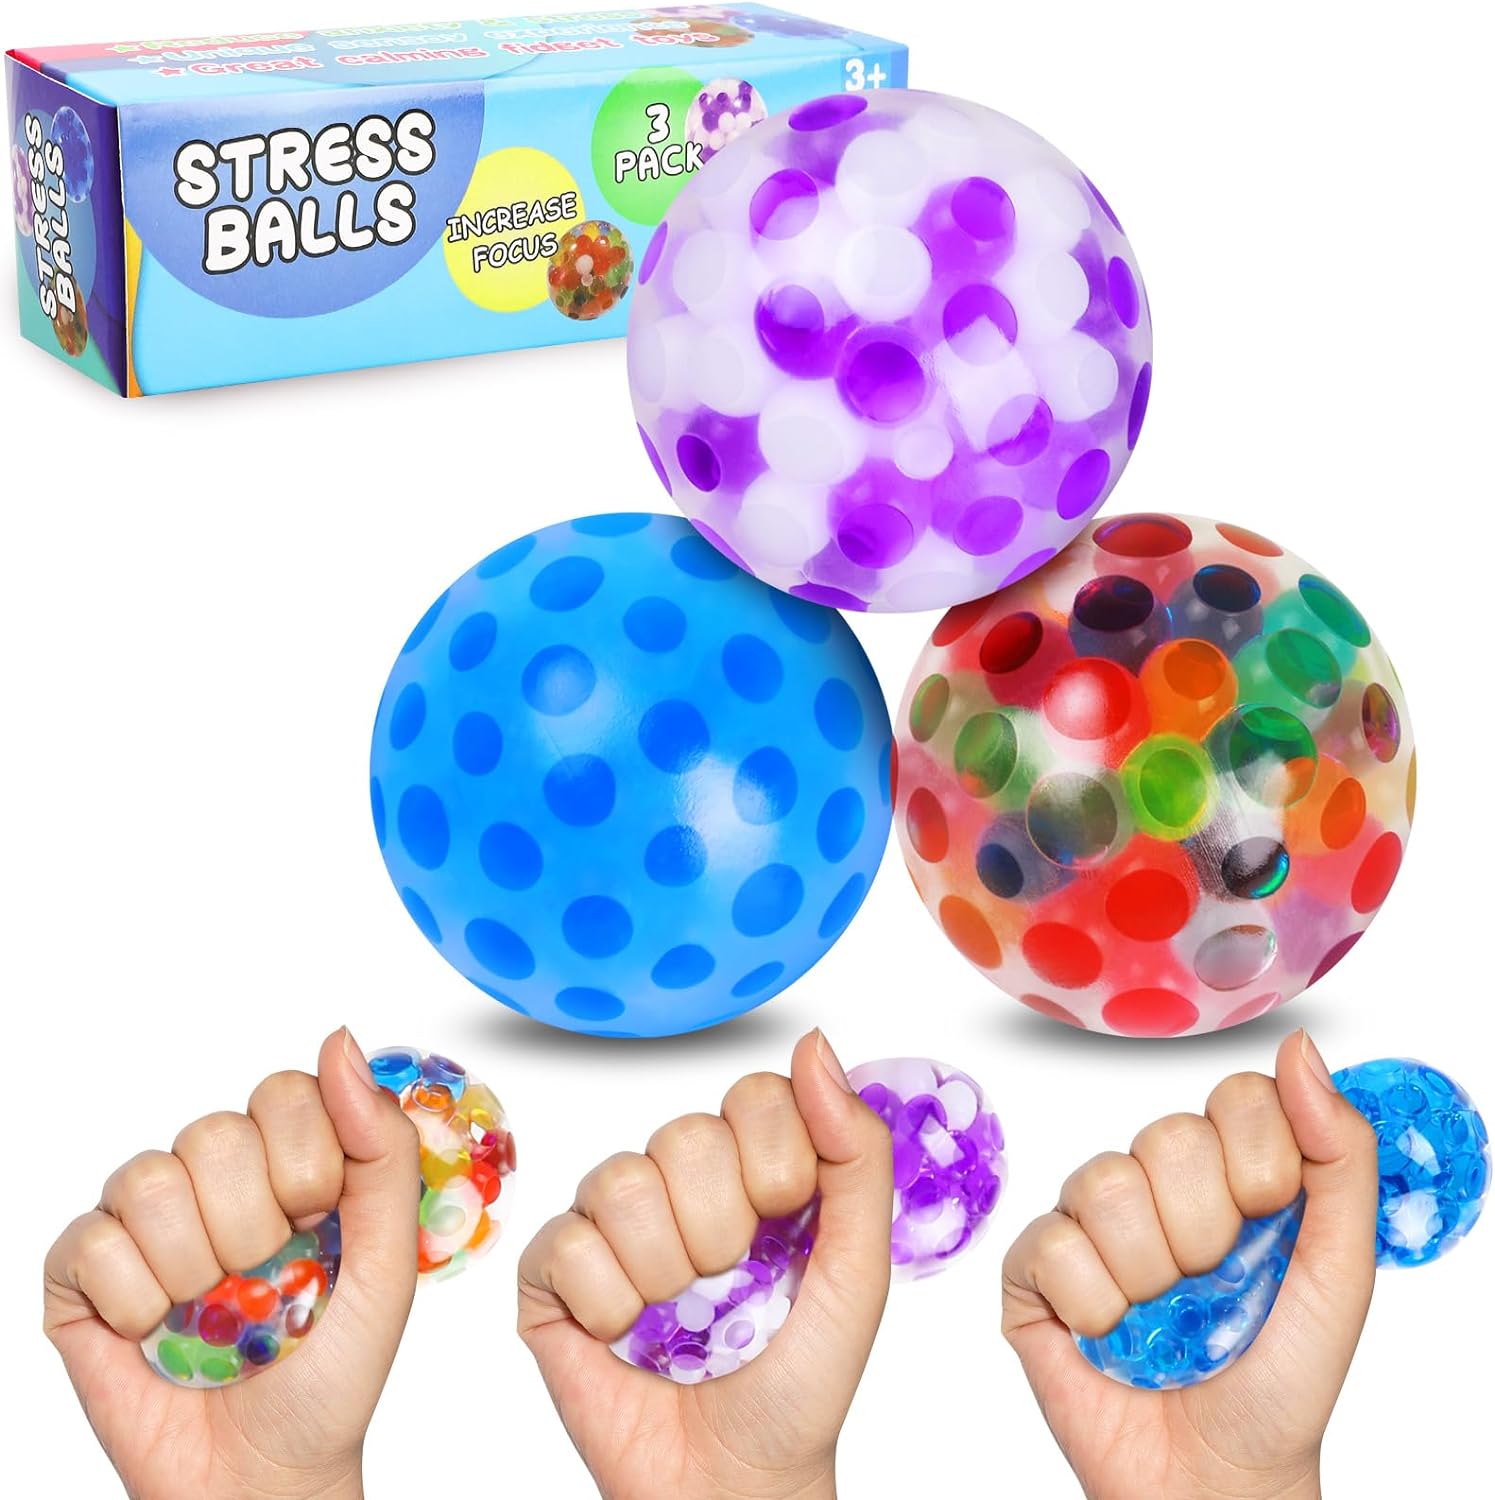 Easter basket ideas for tween boys: squishy stress balls